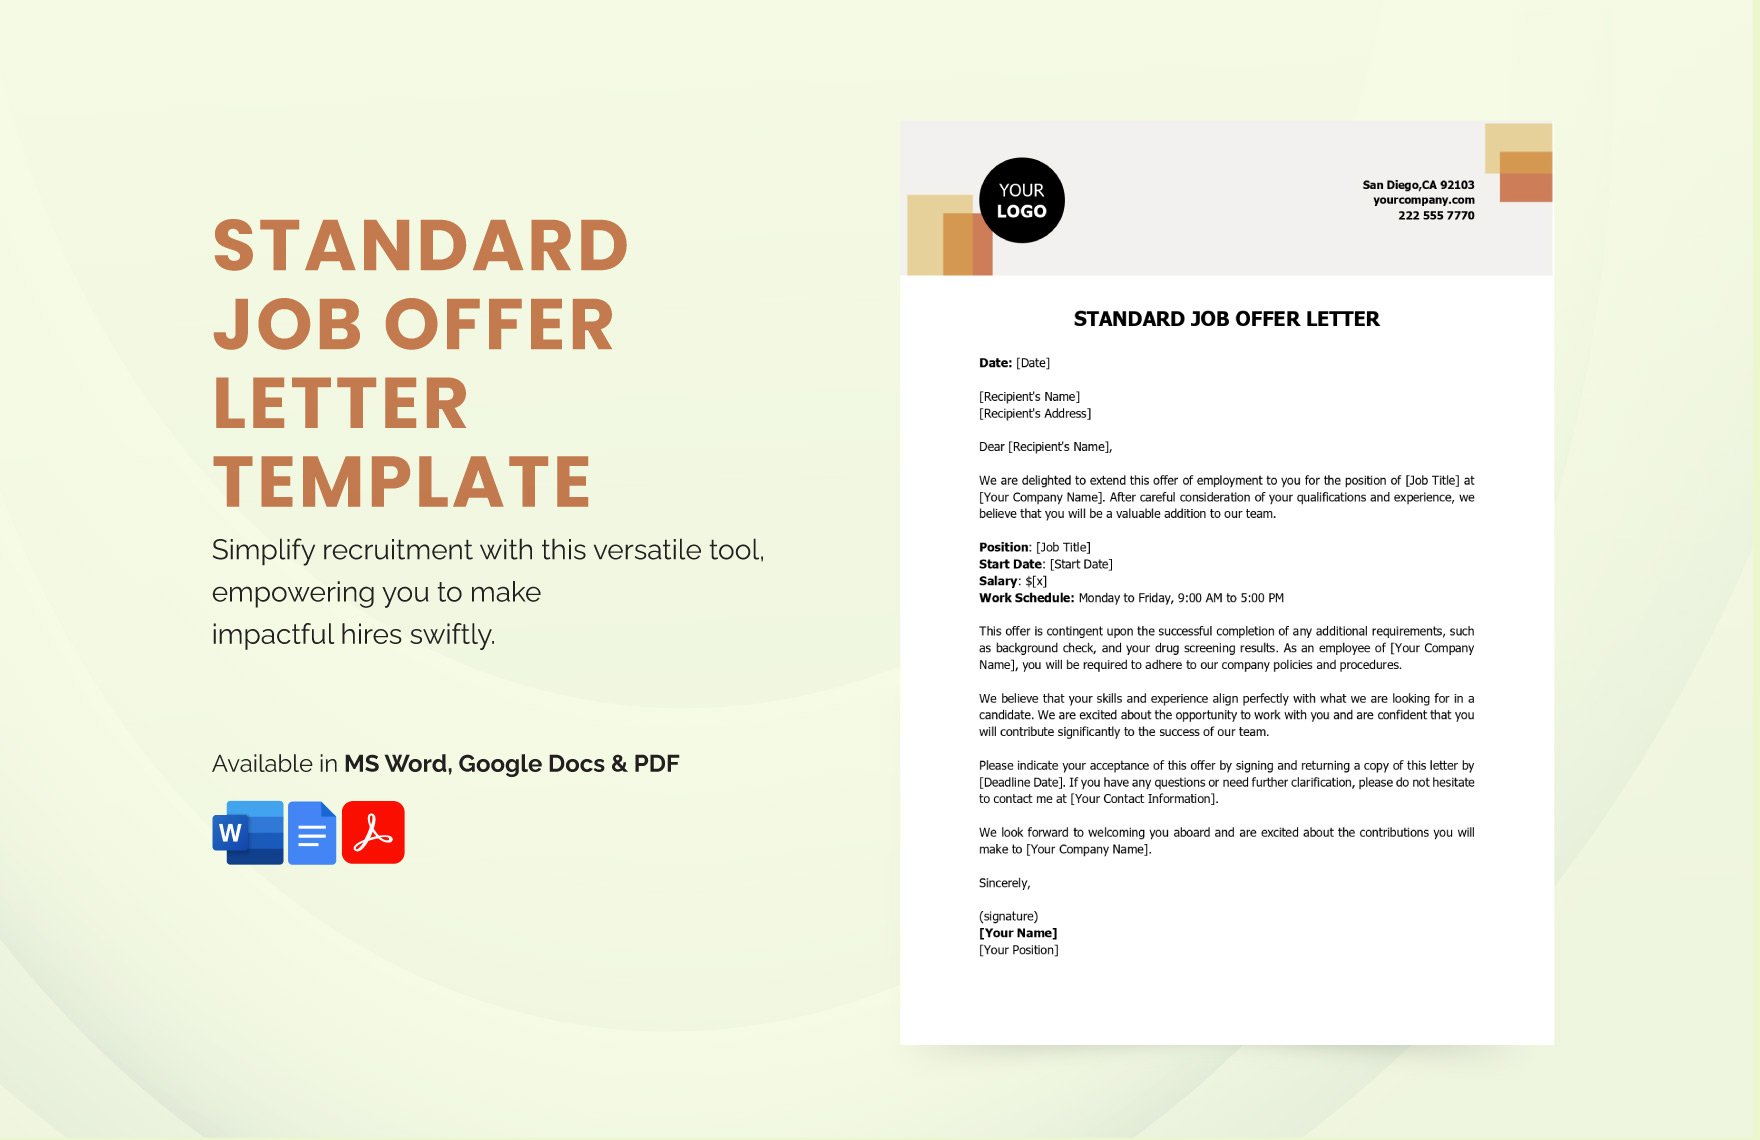 Standard Job Offer Letter Template